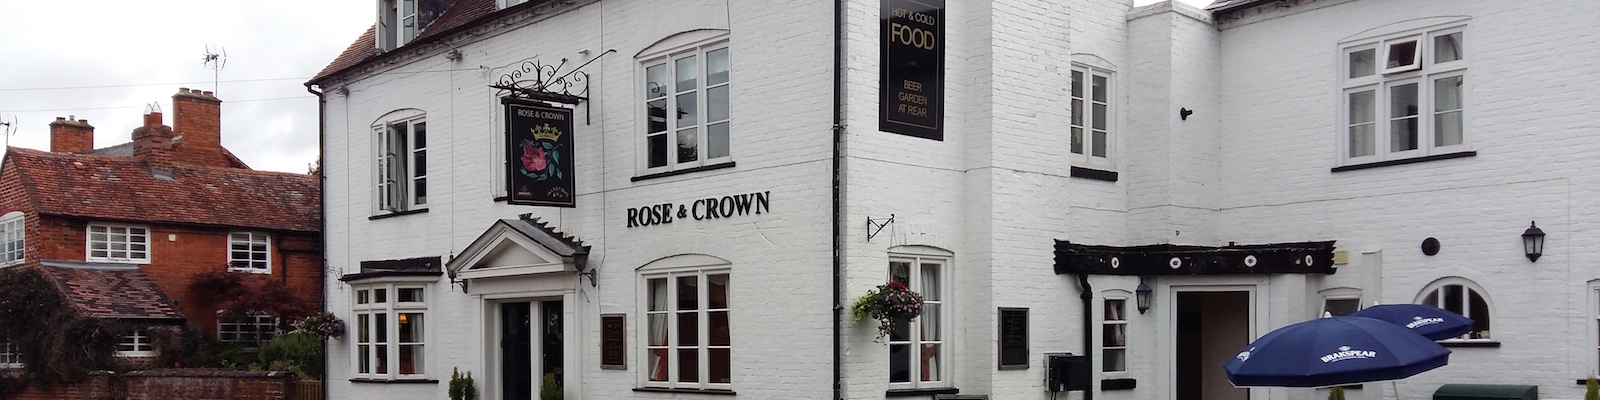 rose and crown feckenham front of pub